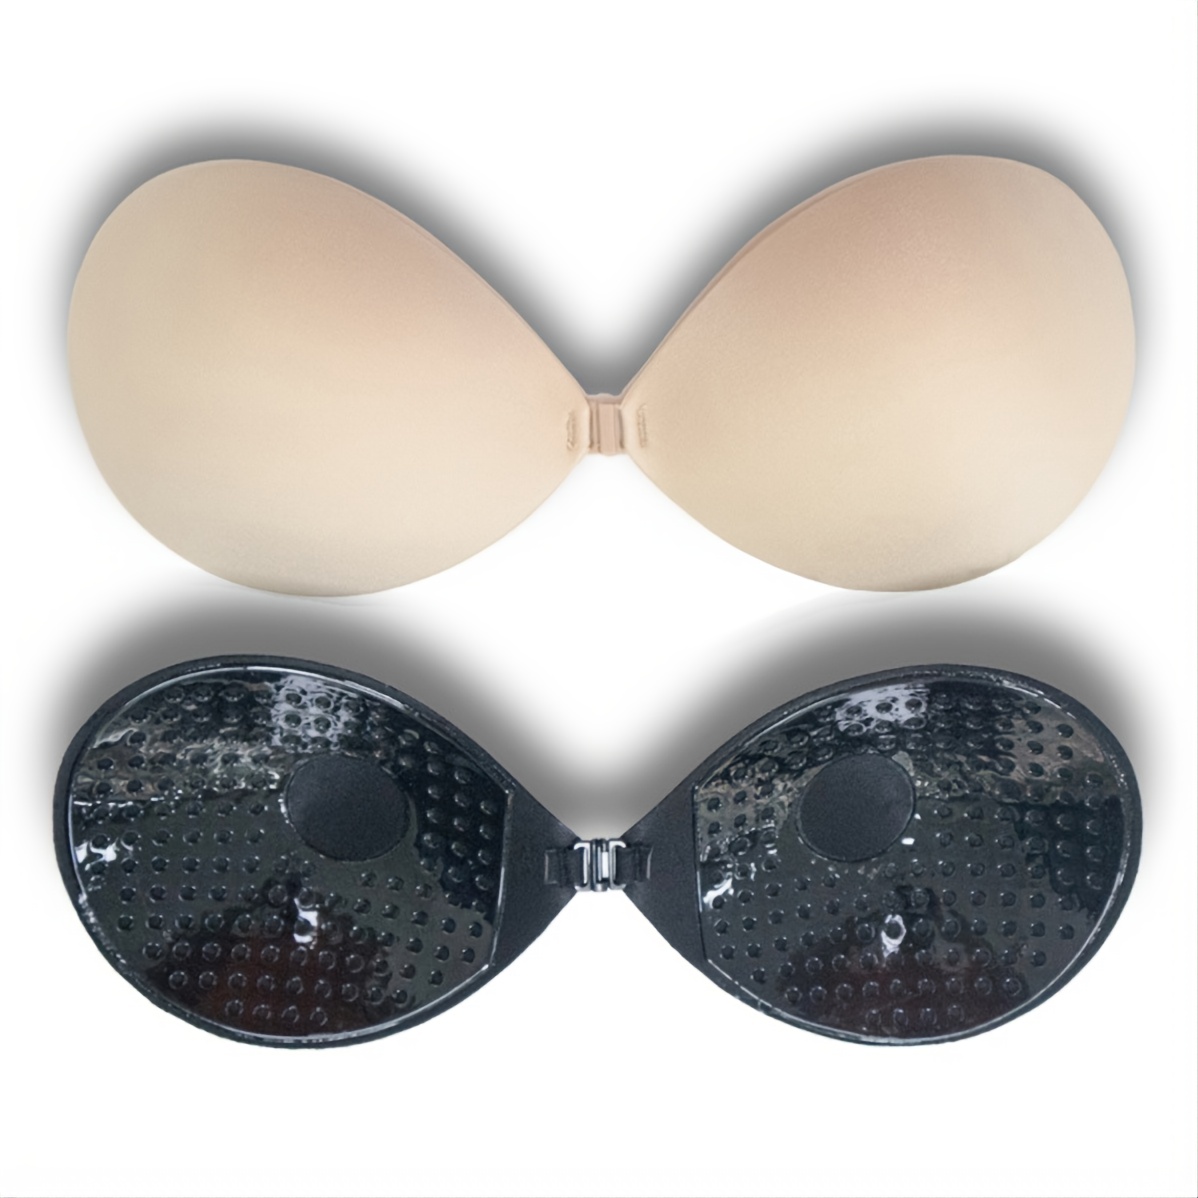 Breast Nude Color Adhesive Silicone Invisible Strap Enhancer Self enhancer  Push Bra Bras